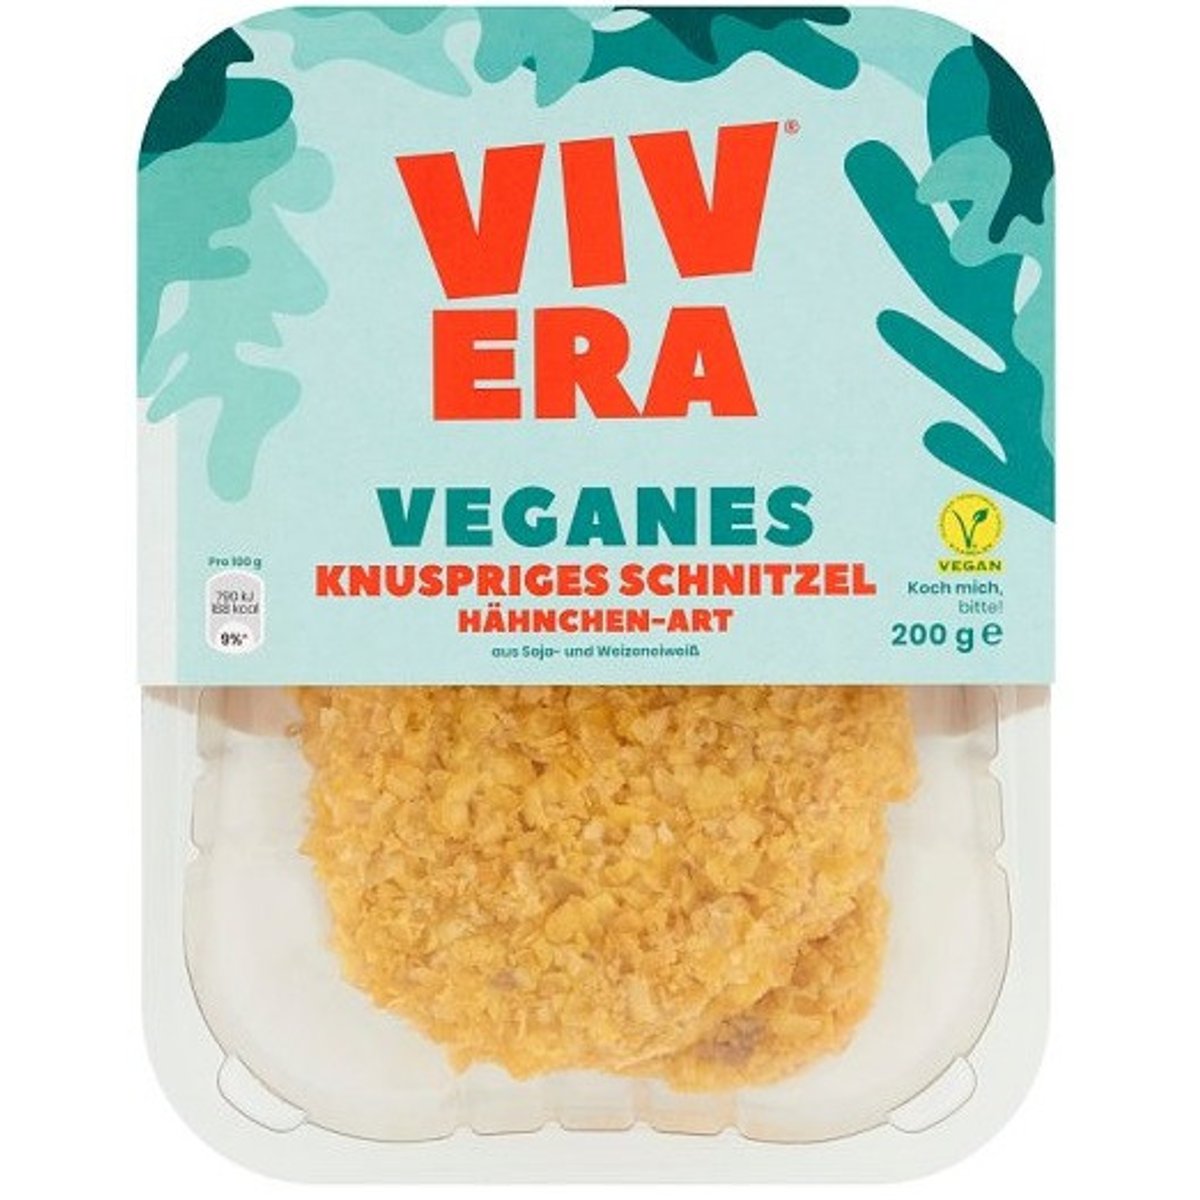 Vivera Vegan schnitzel